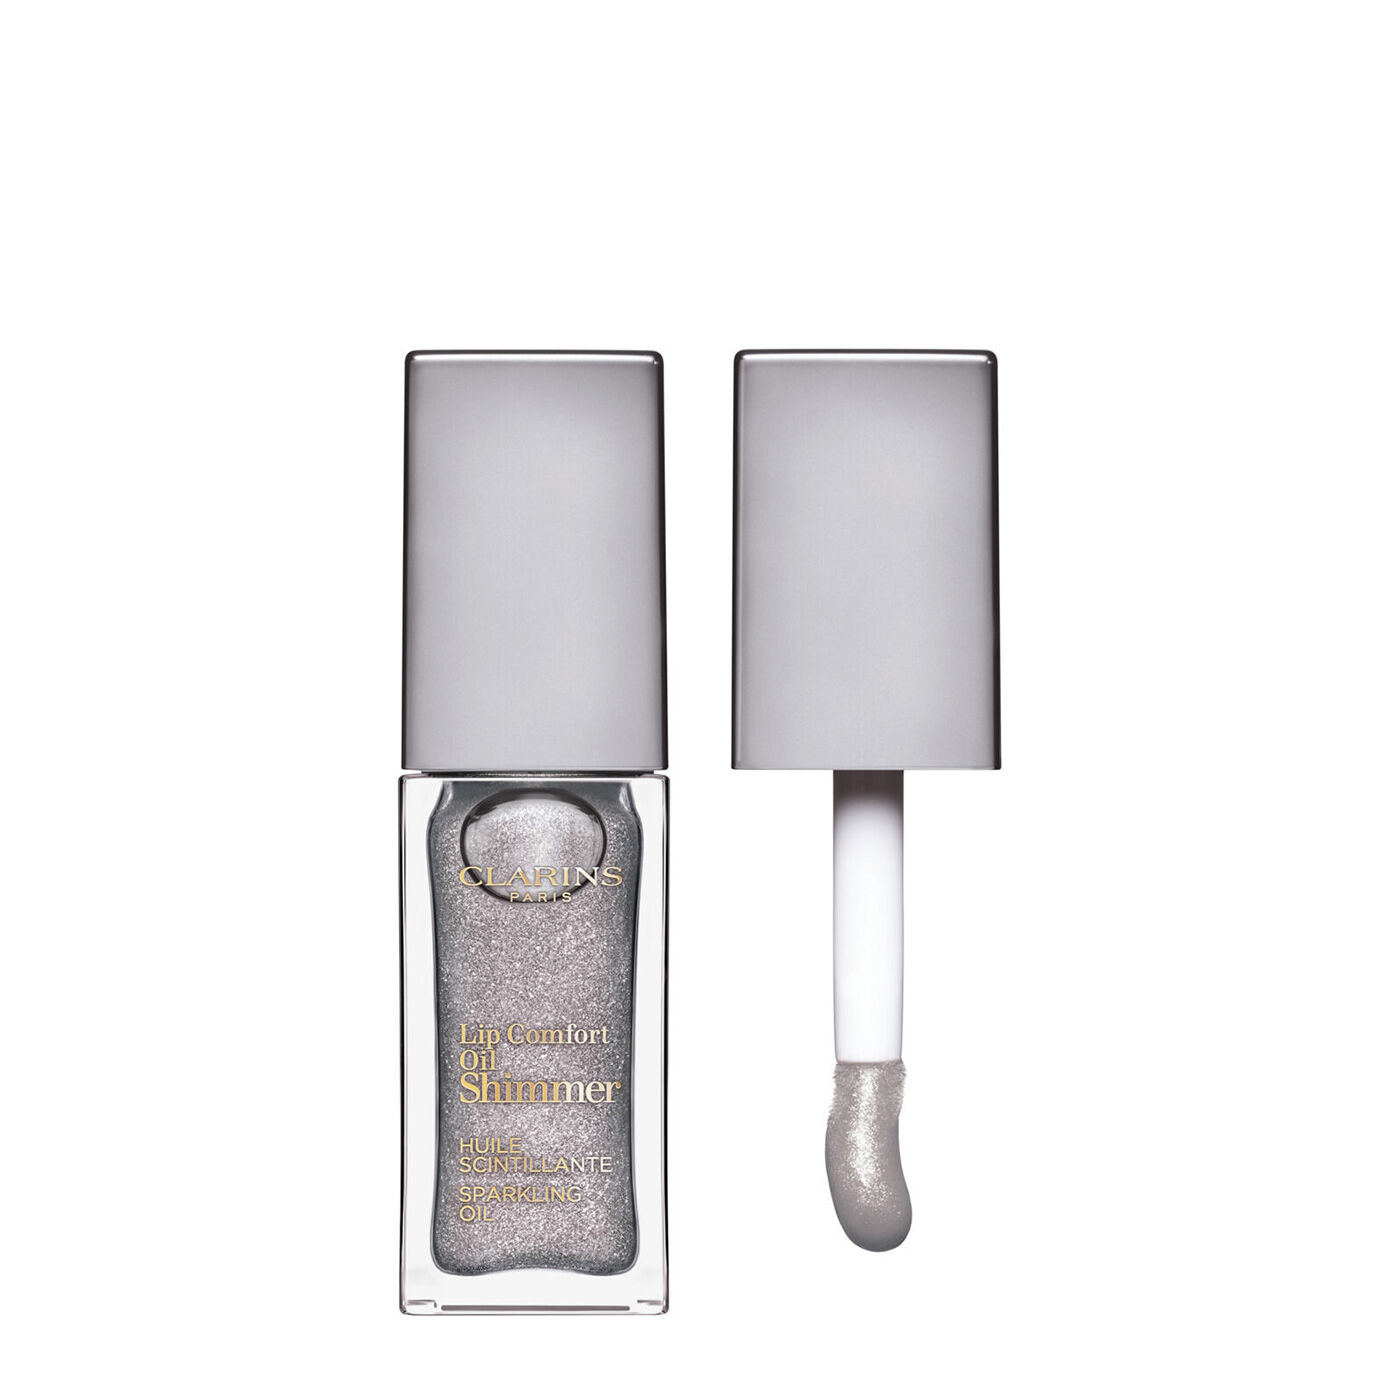 Shop Clarins Lip Comfort Oil Shimmer In 1 Sequin Flares